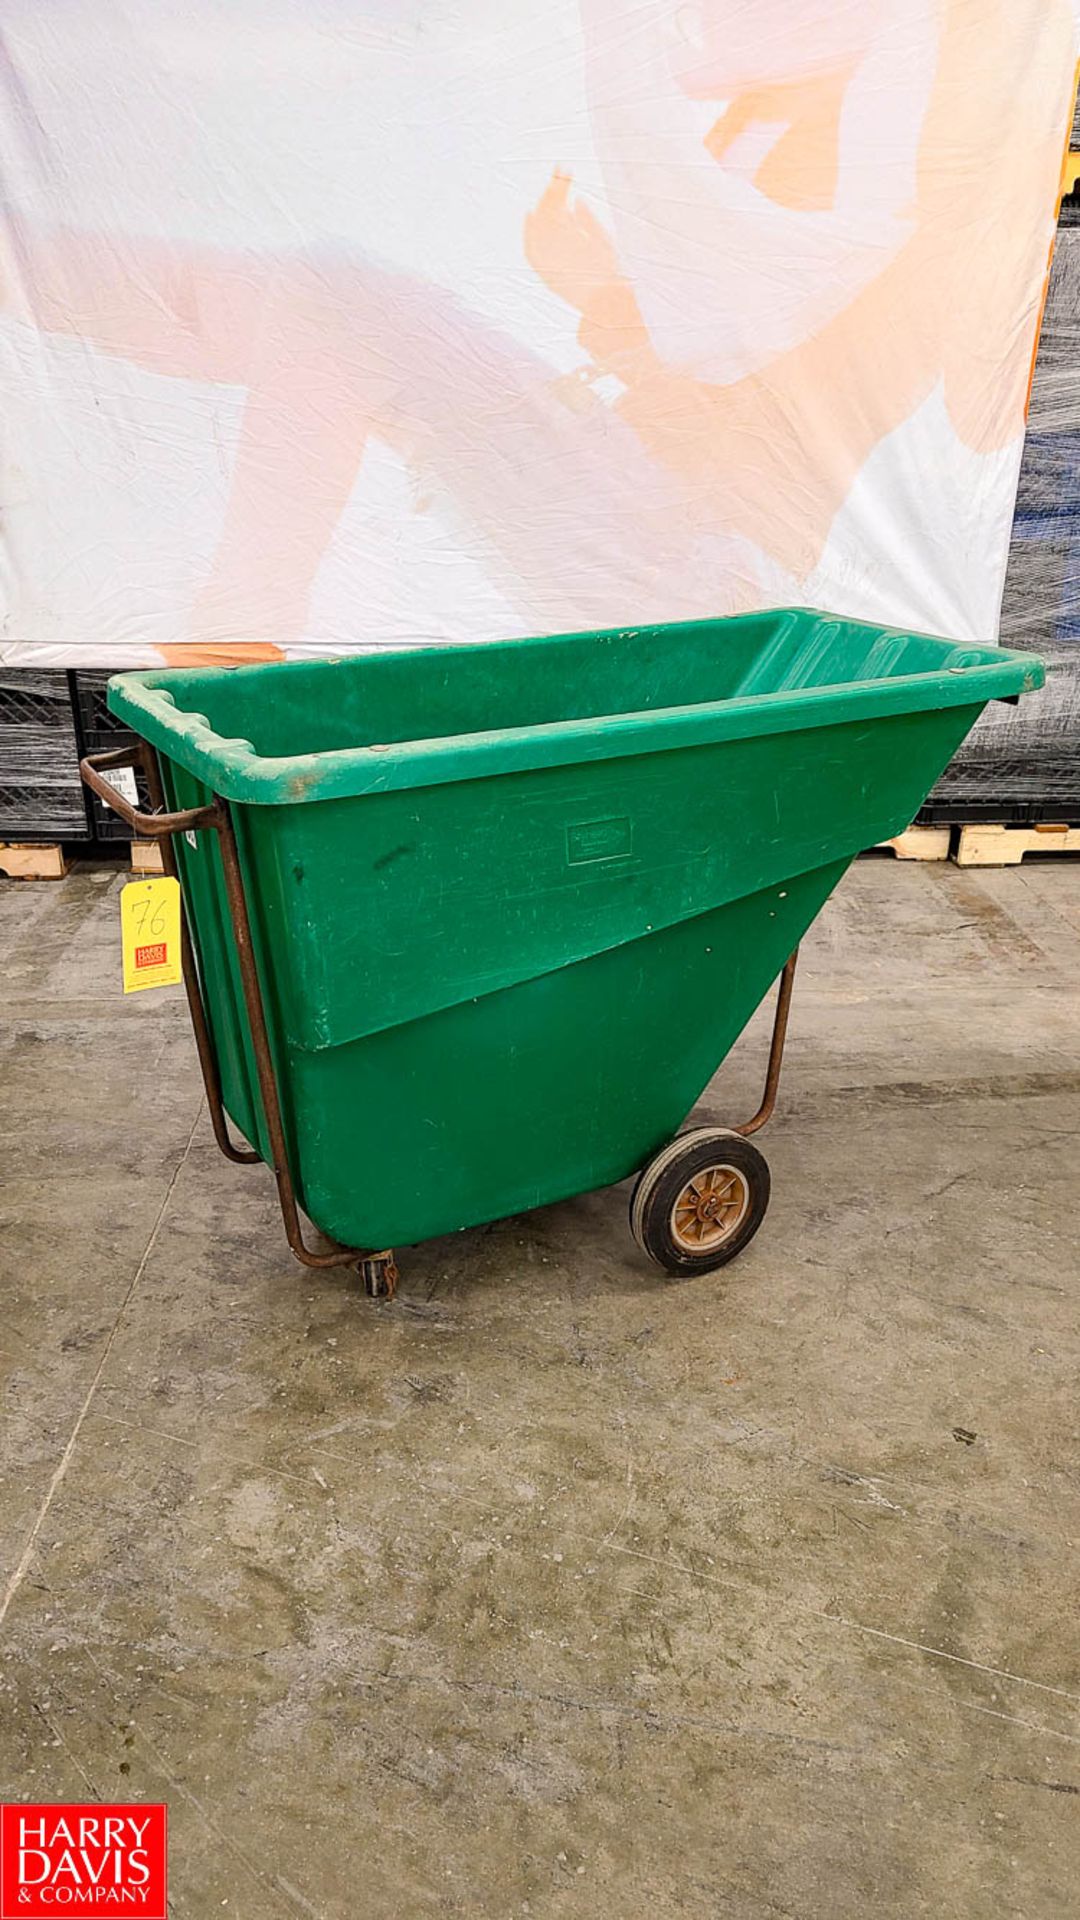 Bayhead Portable Dumpster, 5/8th Cubic Yard 300 LB Capacity - Rigging fee: $50 - Image 2 of 2